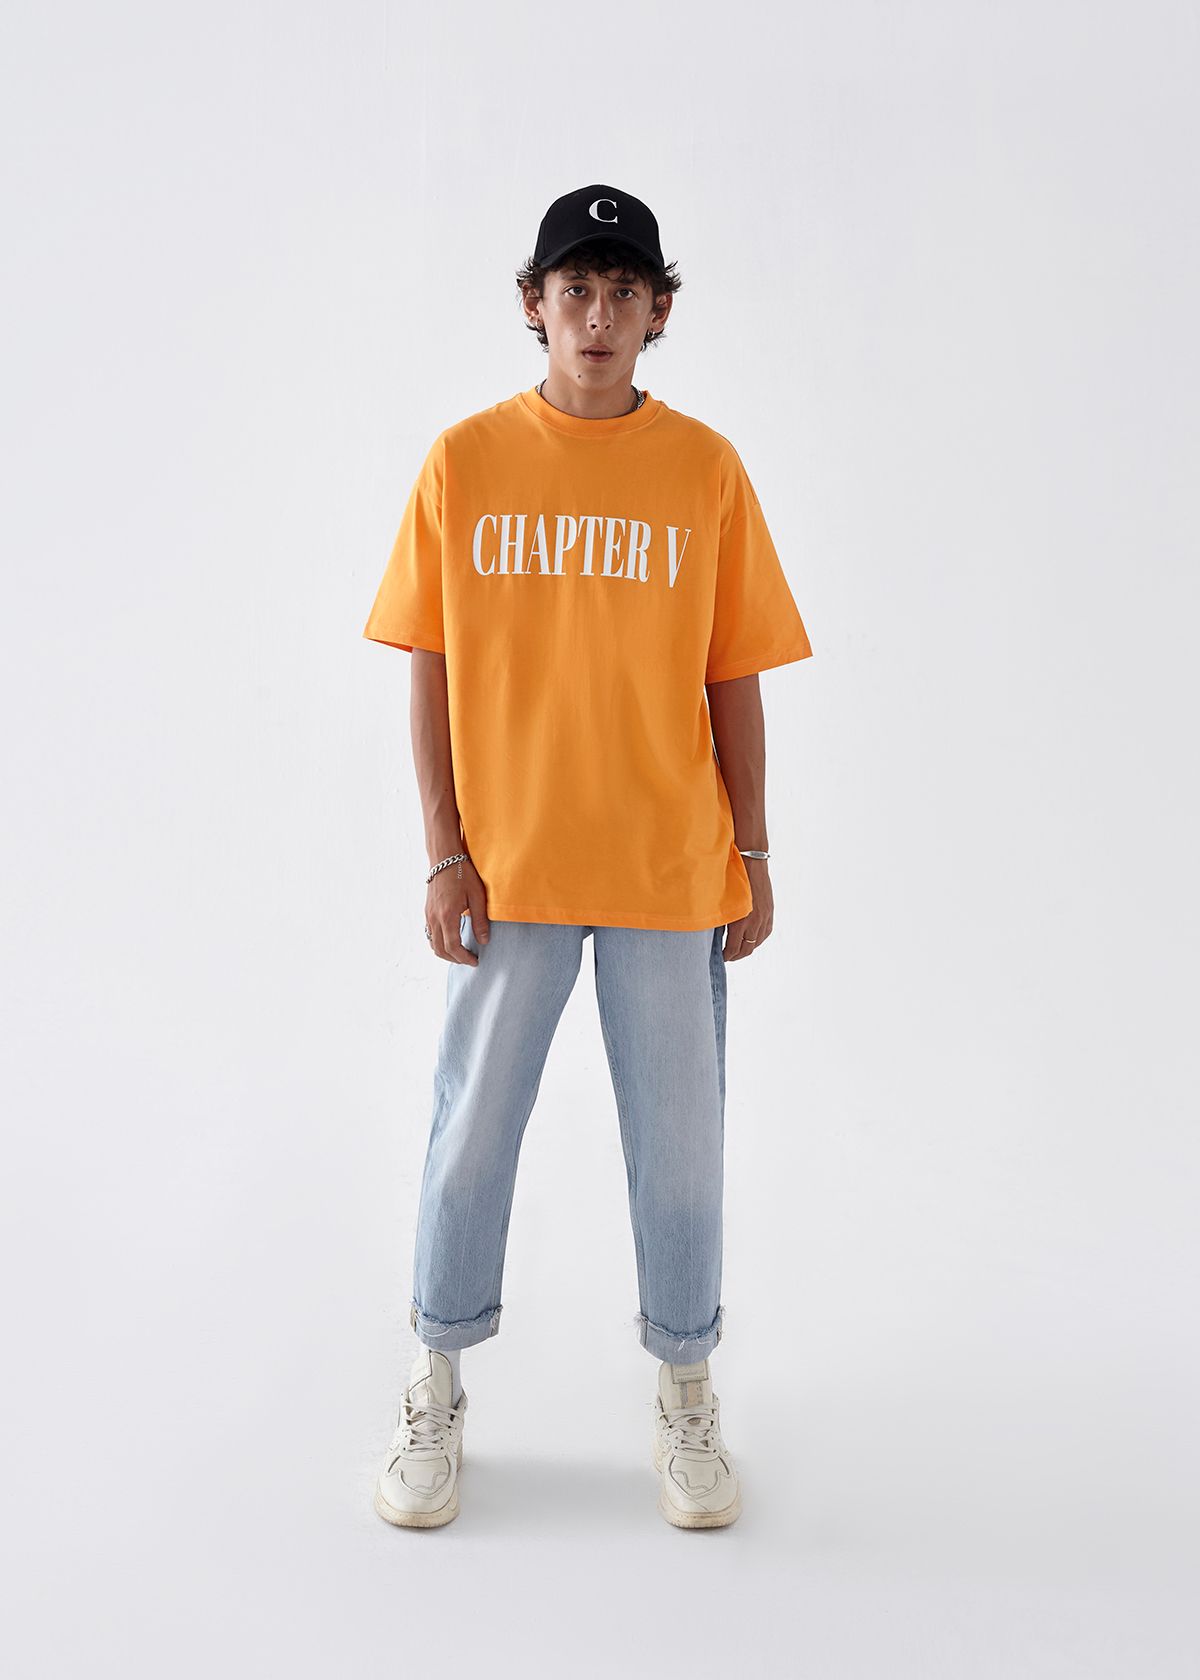 Discover T-Shirt - Orange